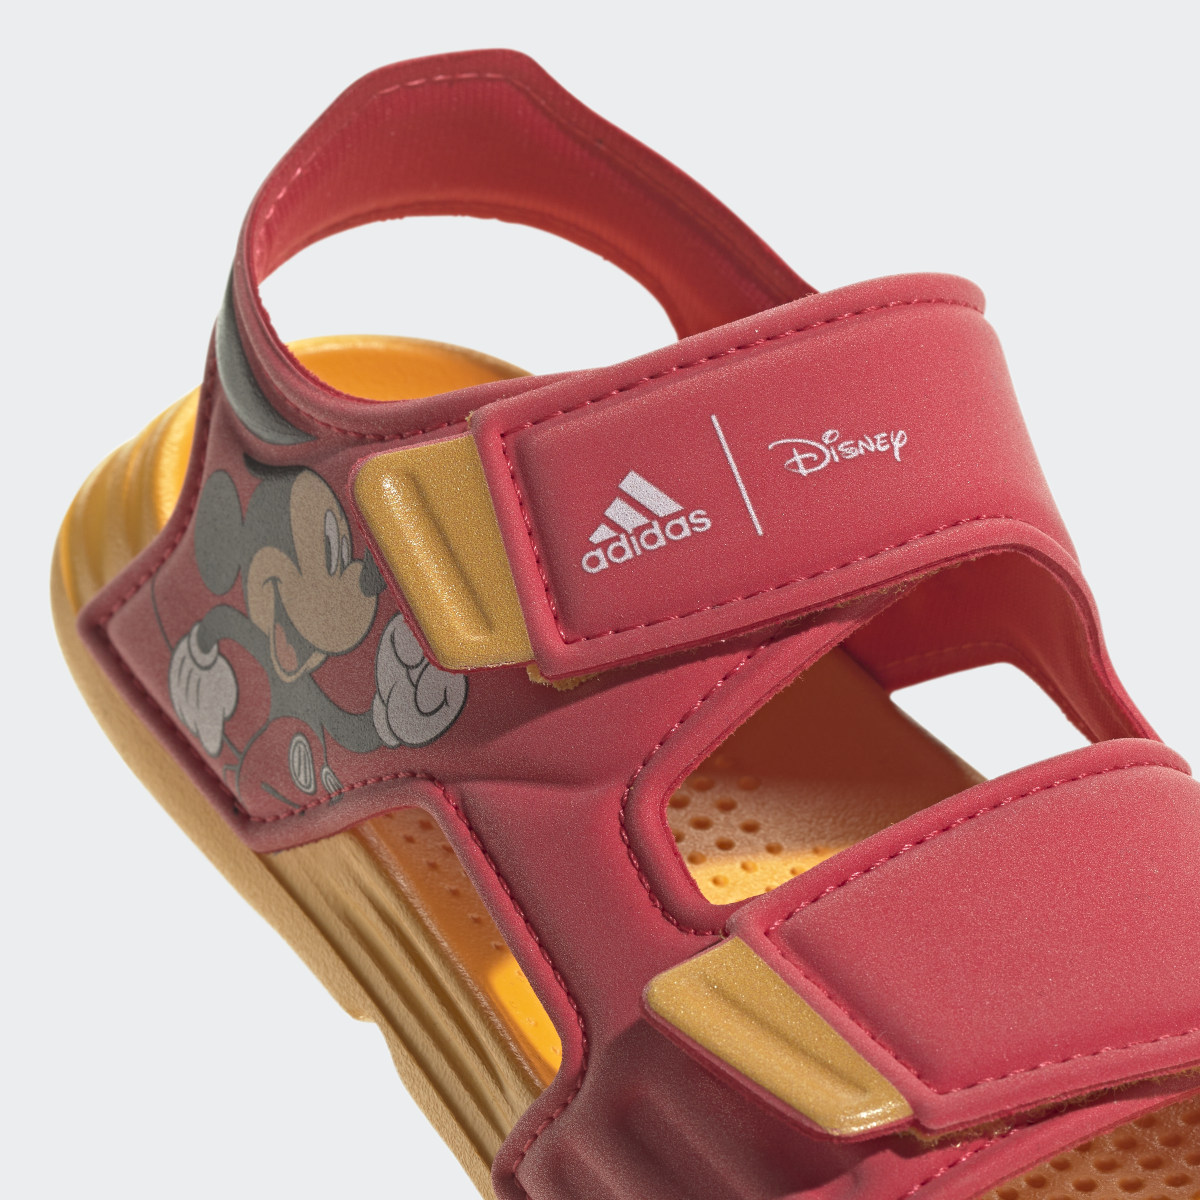 Adidas x Disney Mickey Mouse AltaSwim Sandals. 10